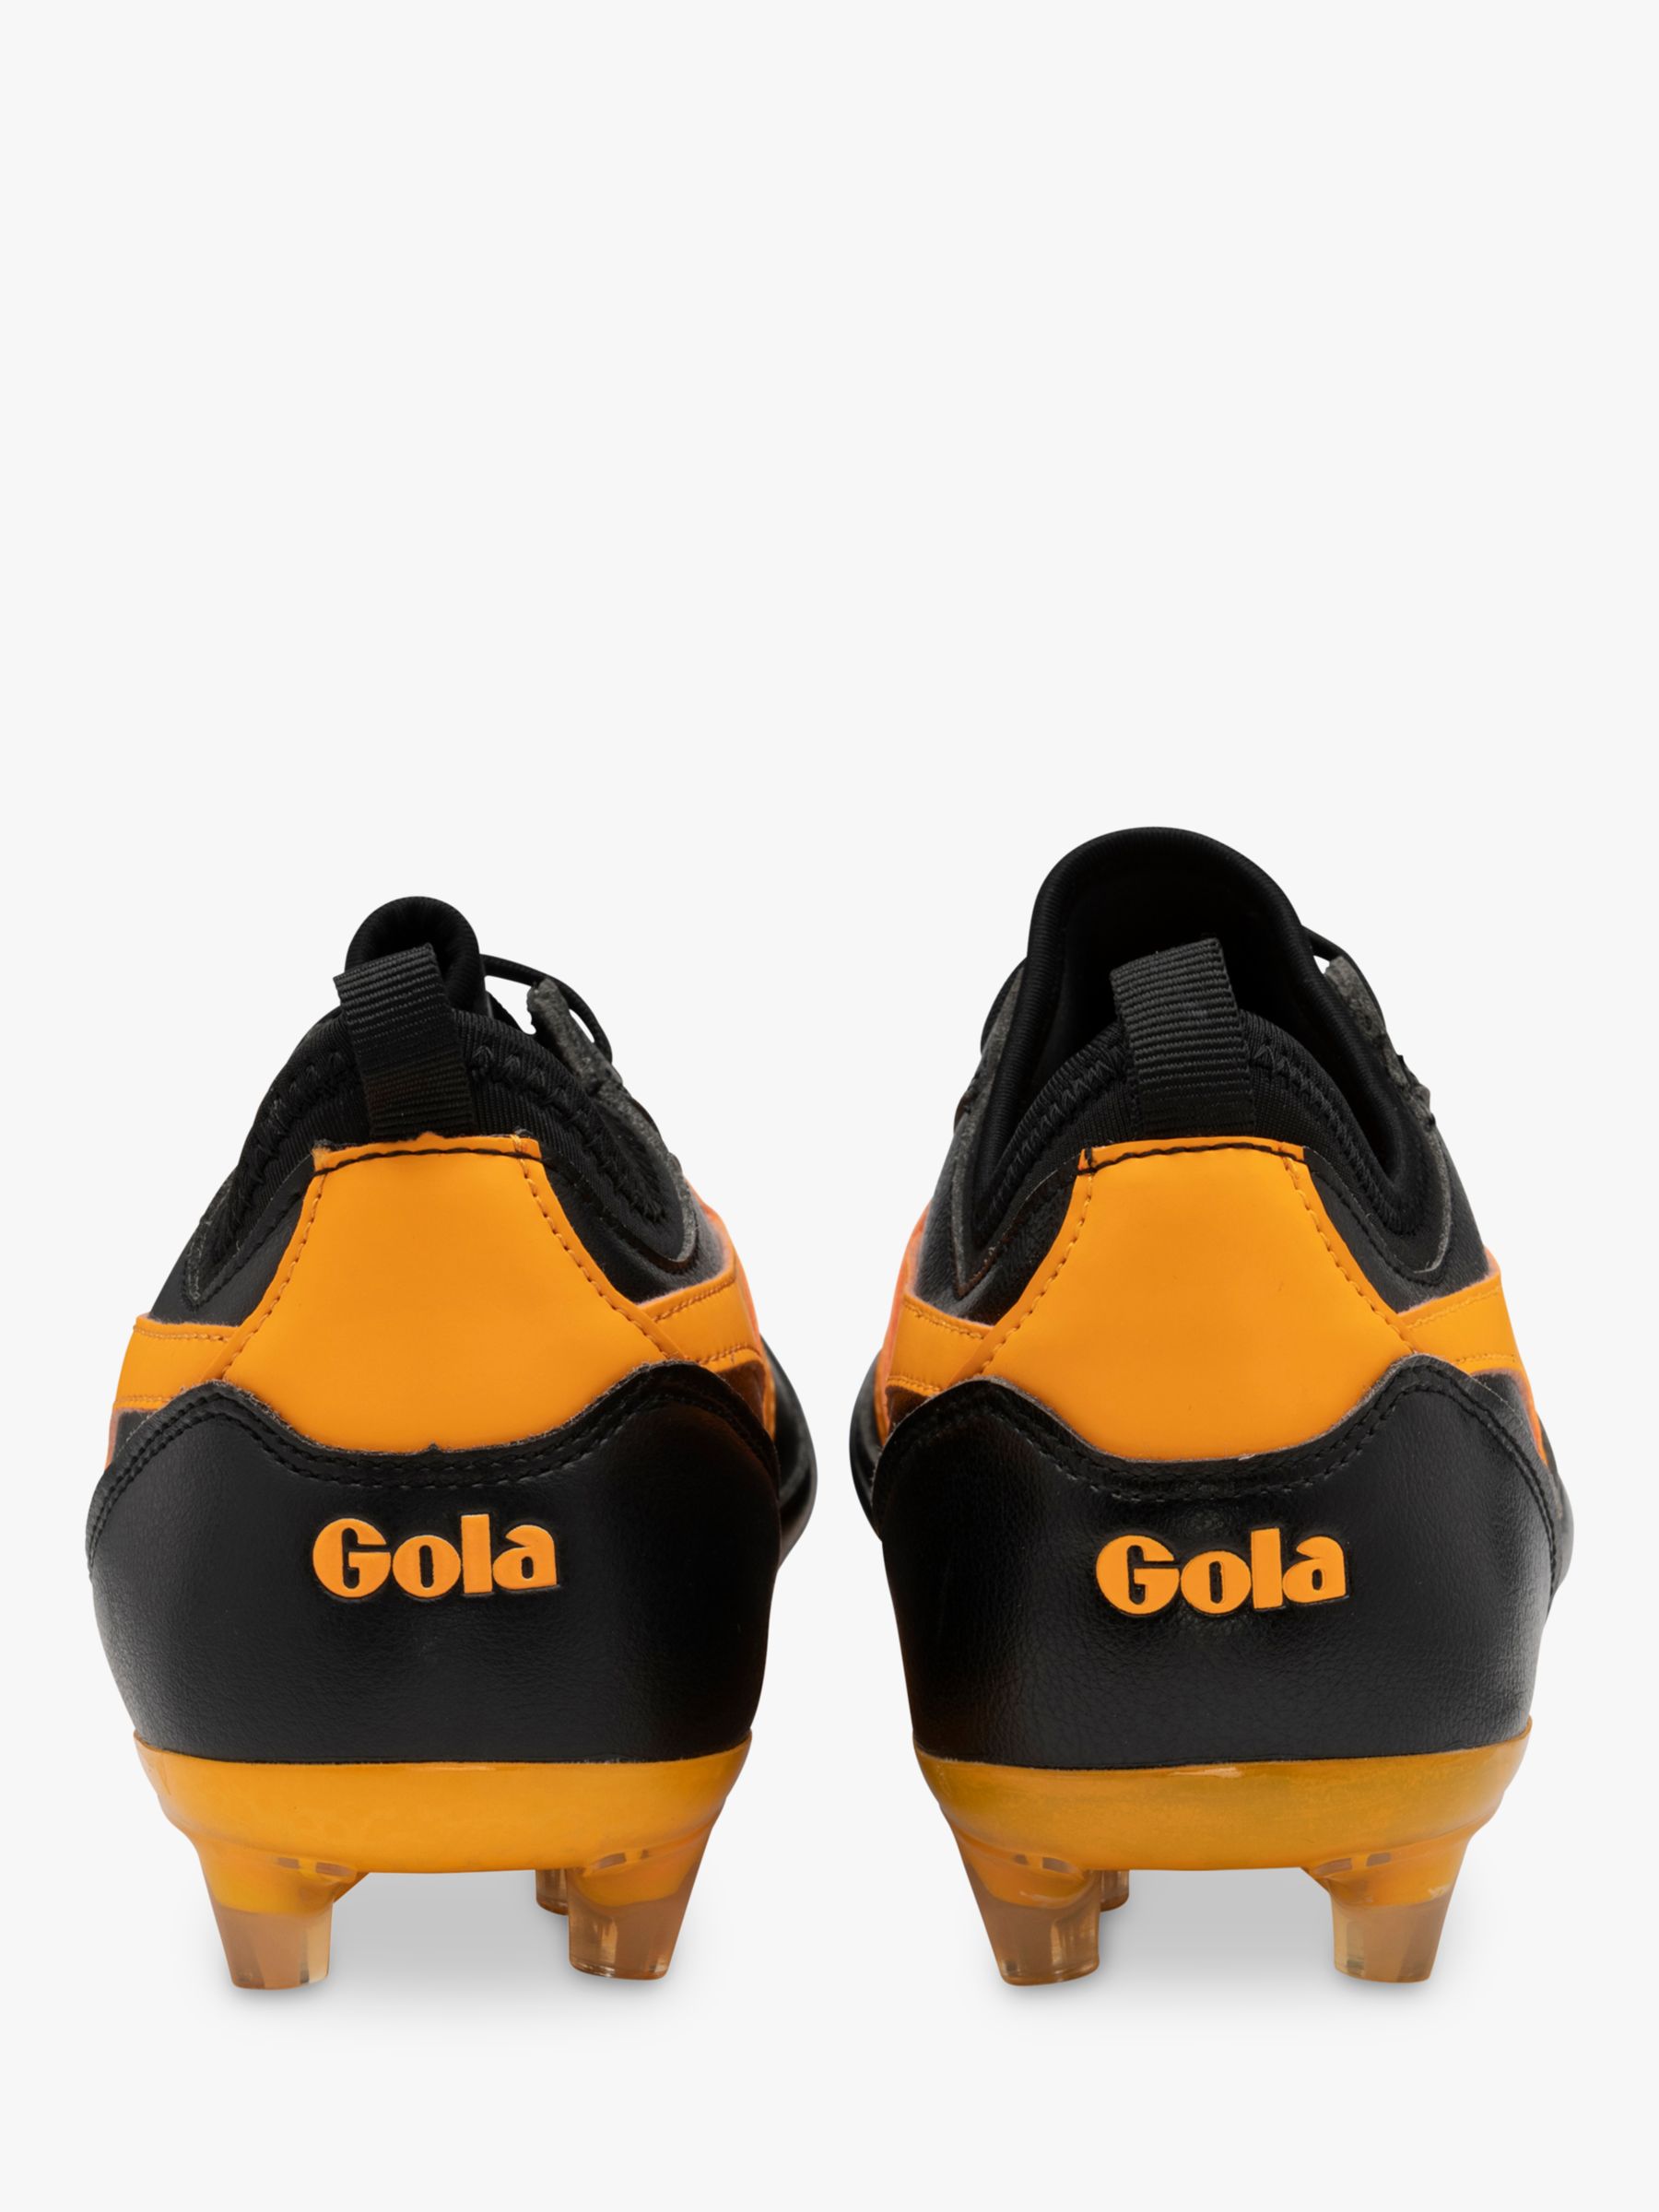 Gola Kids' Performance Ceptor MLD Pro Football Boots, Black/Sun, 38